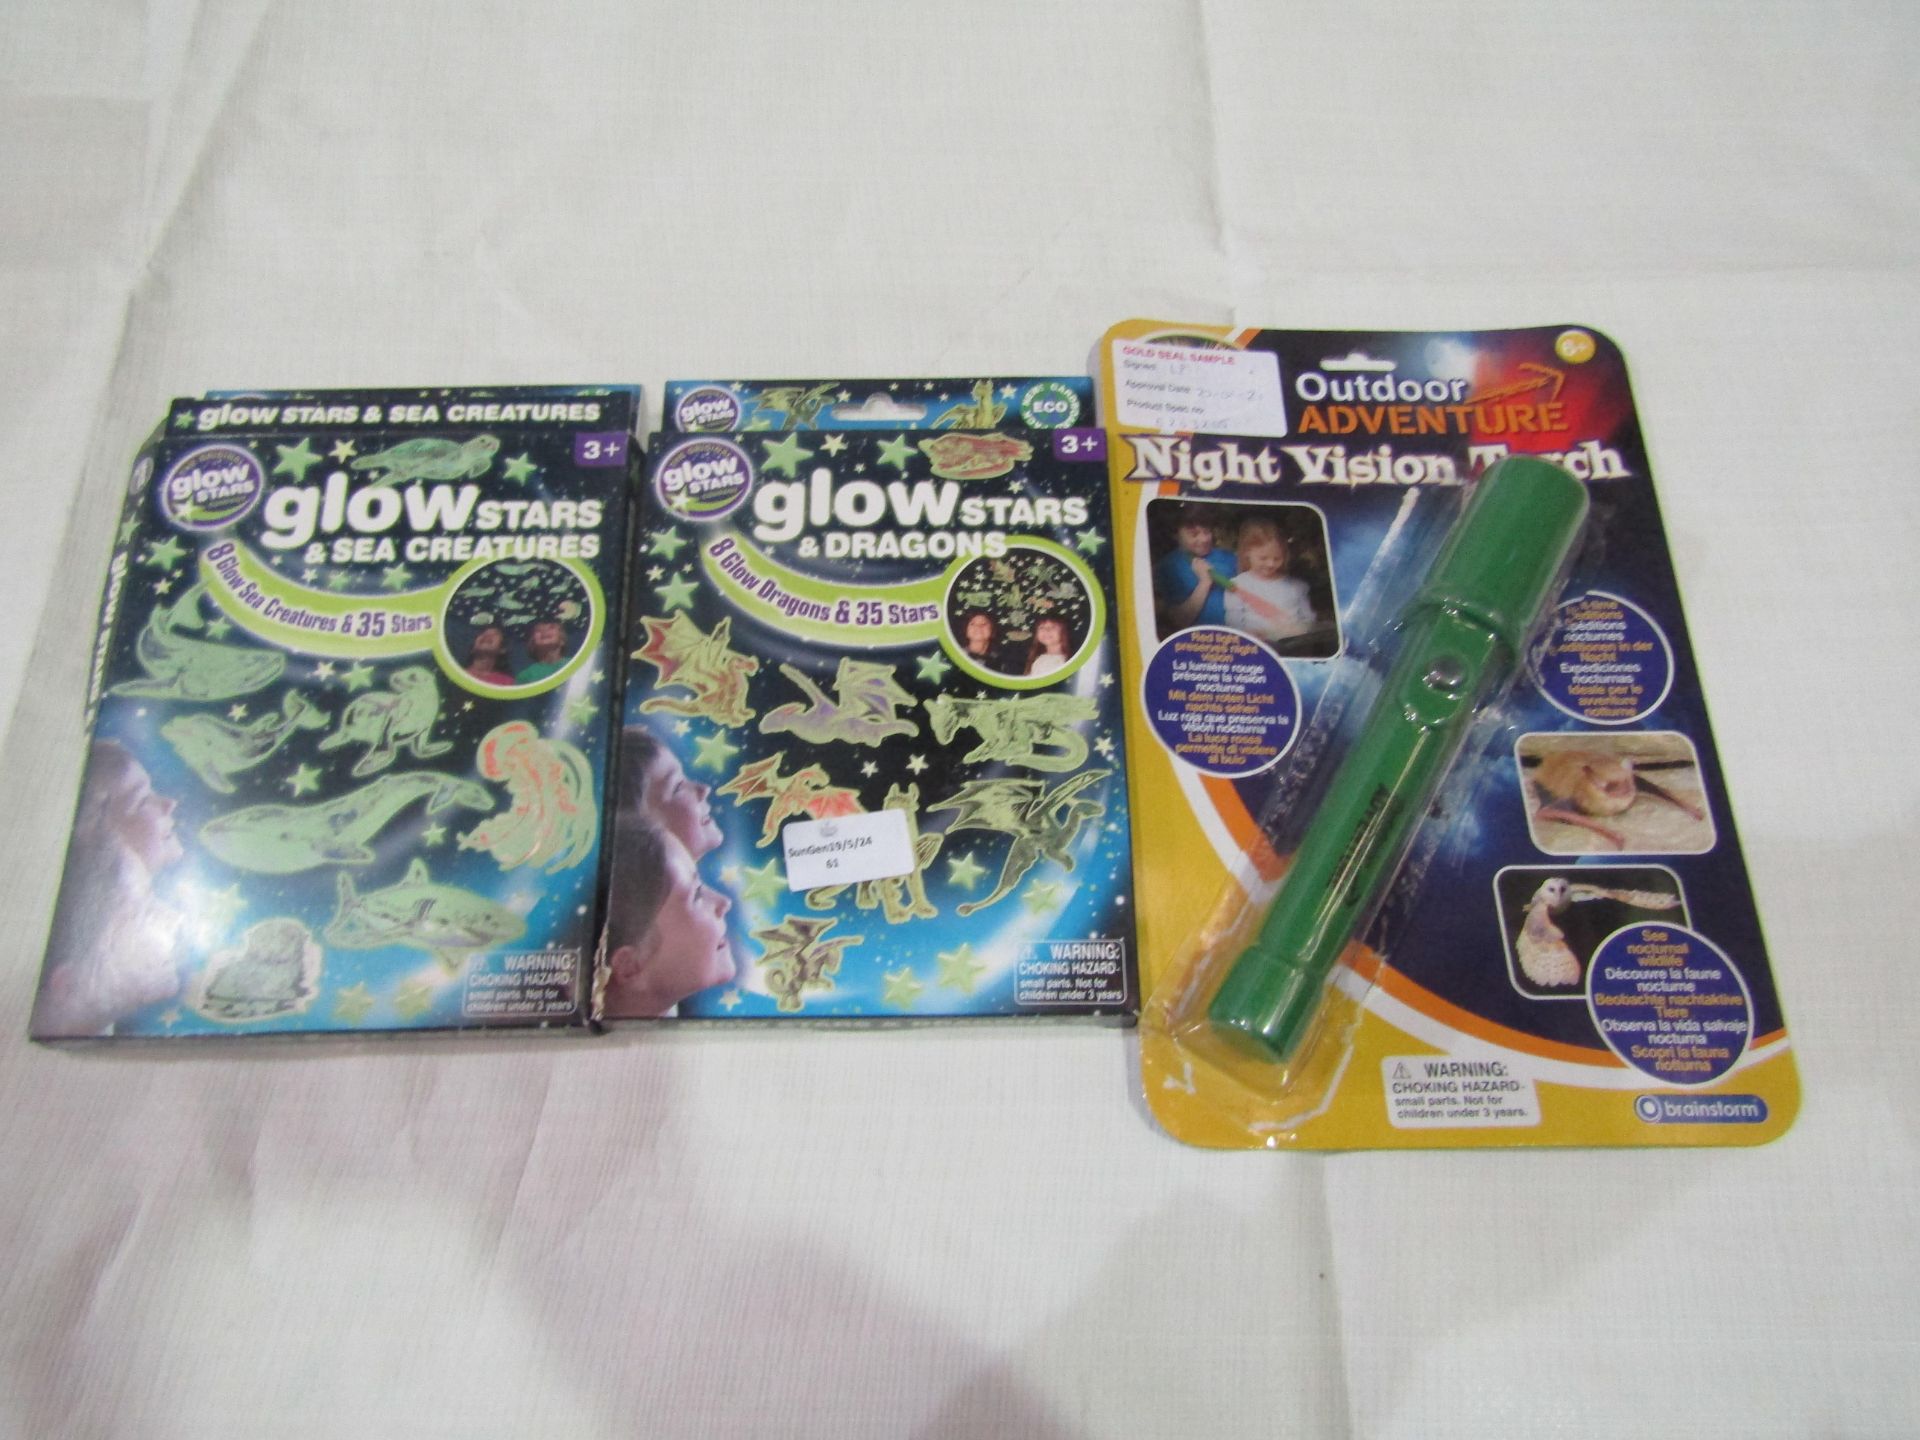 3x Items Being - 1x Glow Stars & Dragons - 1x Glow Stars & Sea Creatures - 1x Brainstorm Outdoor